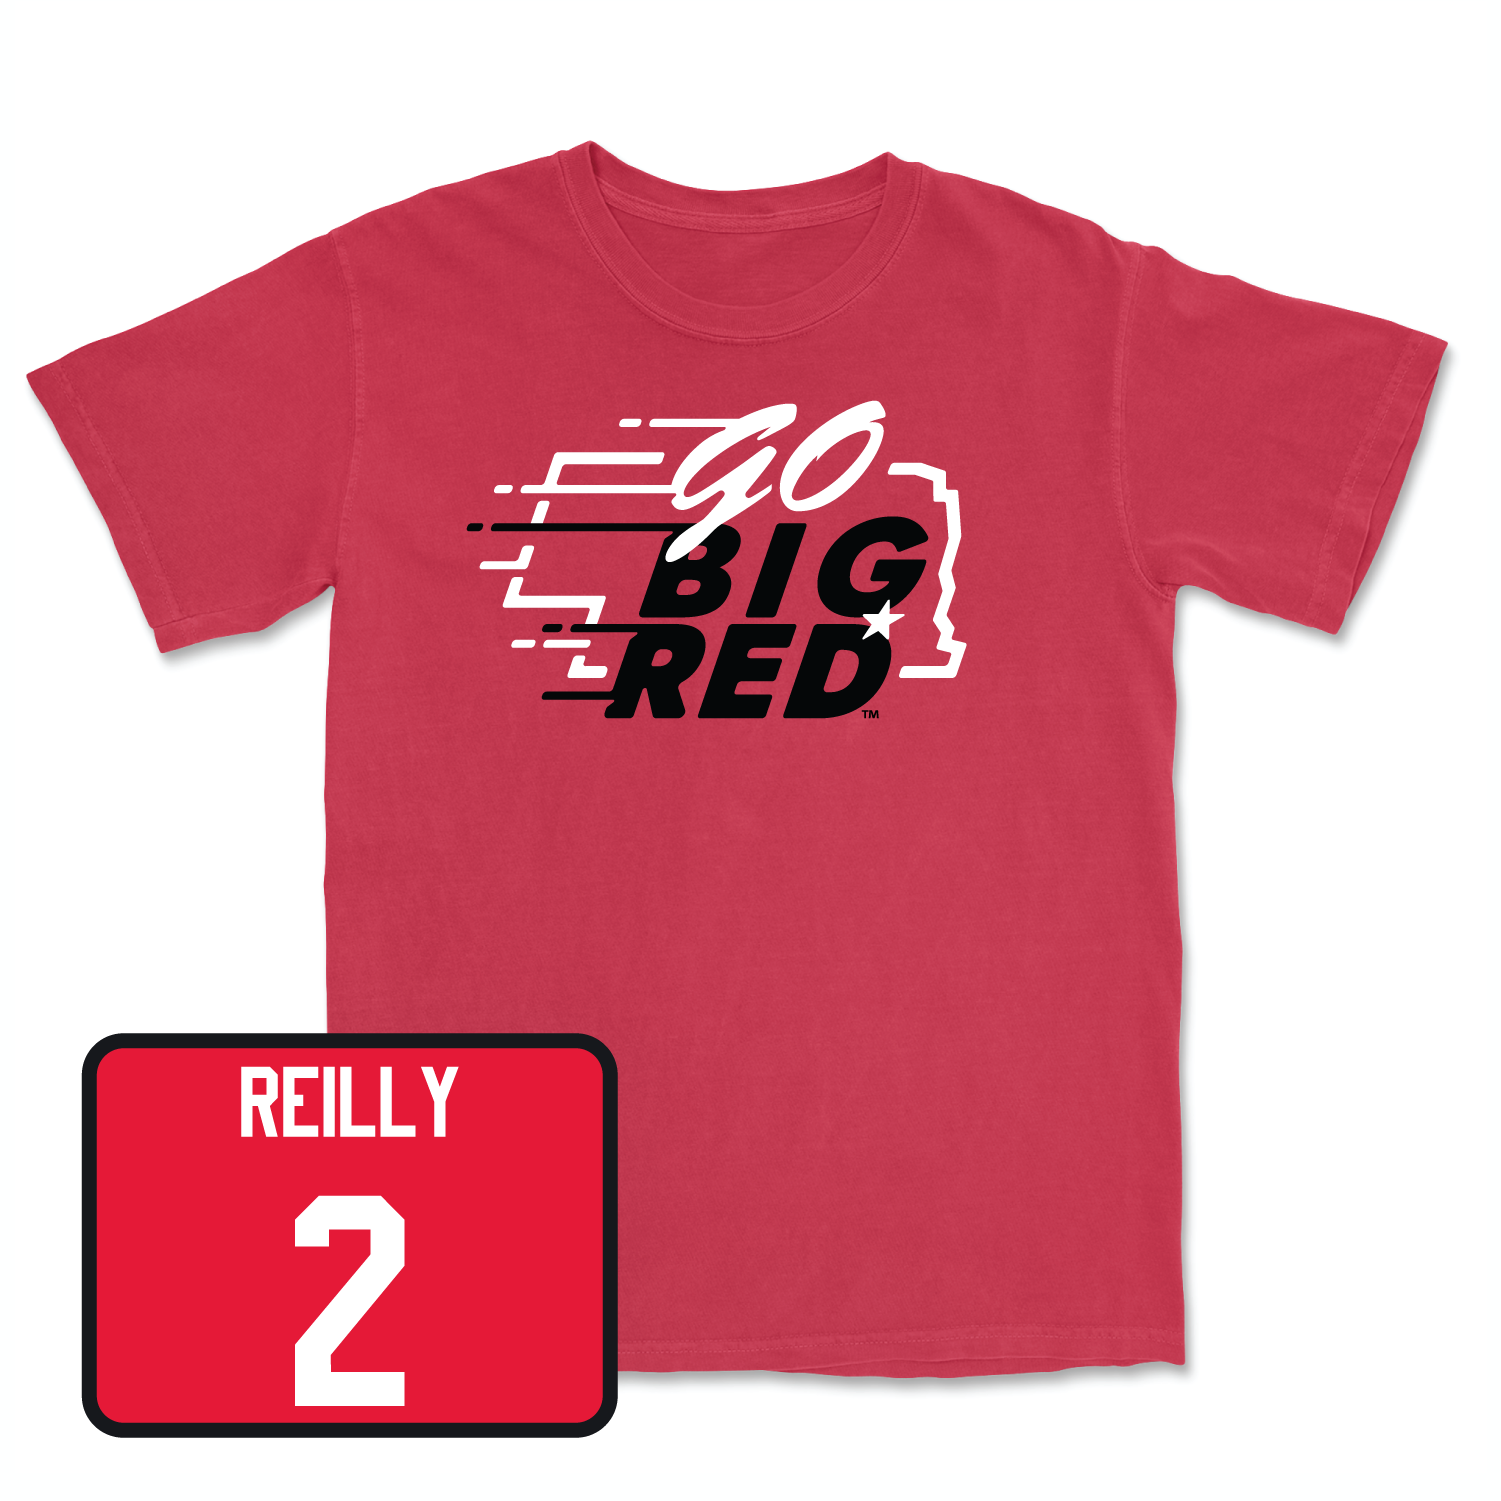 Red Women's Volleyball GBR Tee X-Large / Bergen Reilly | #2